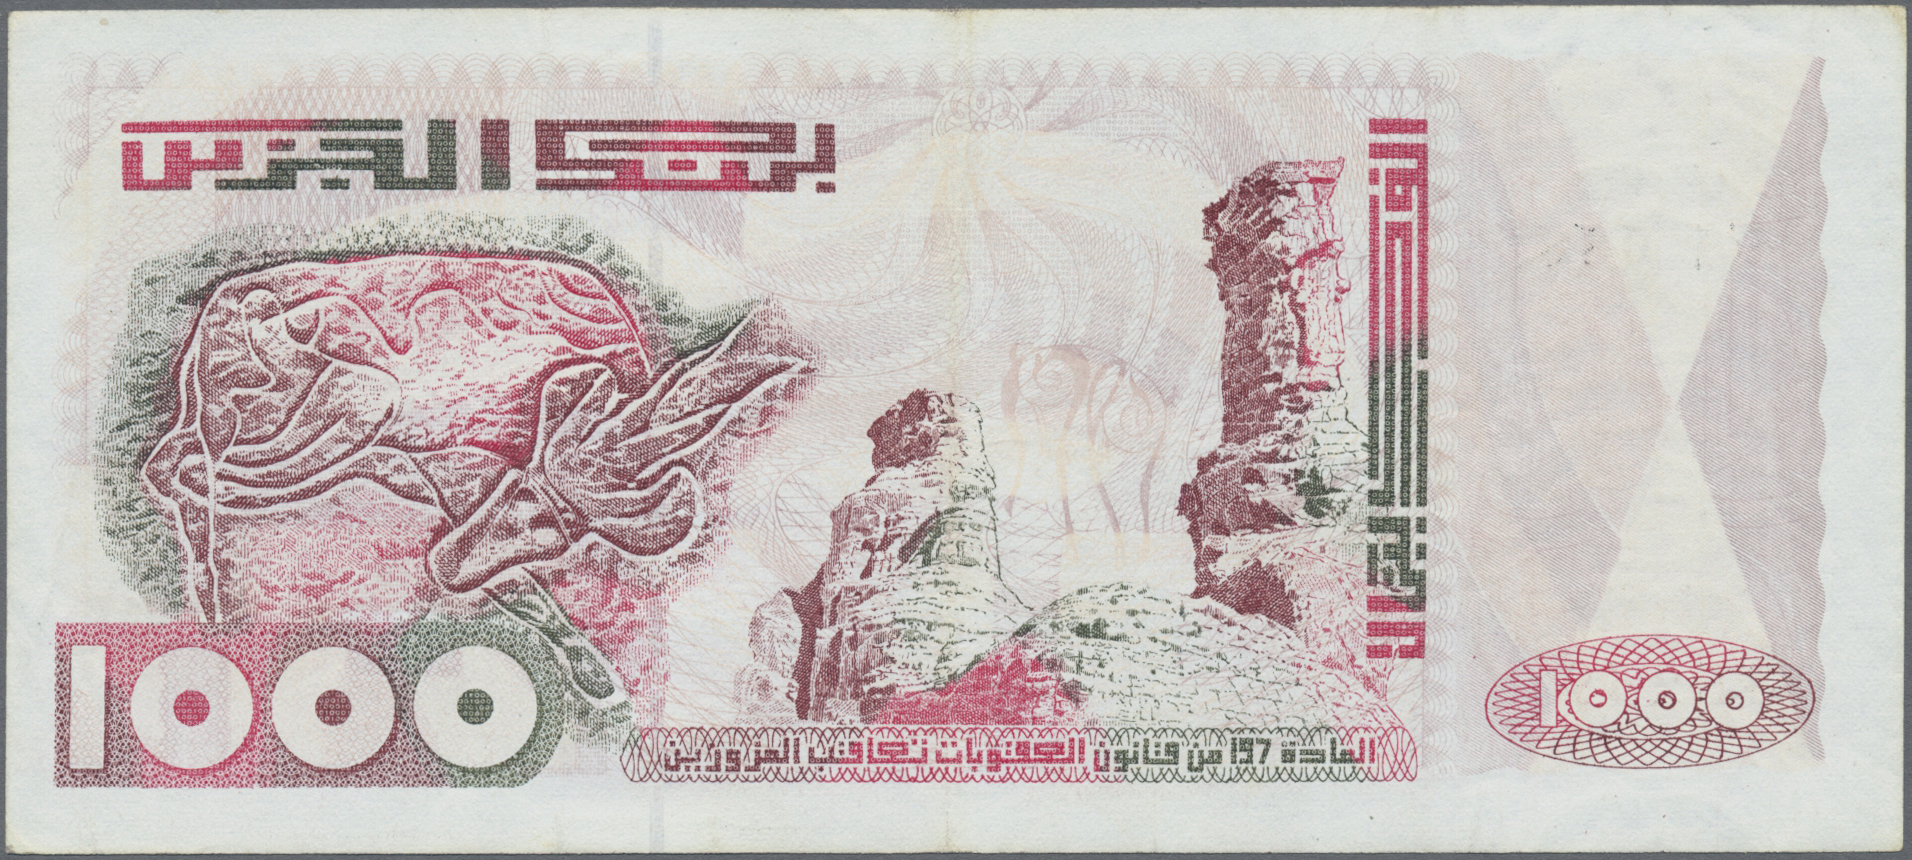 Lot 00030 - Algeria / Algerien | Banknoten  -  Auktionshaus Christoph Gärtner GmbH & Co. KG 55th AUCTION - Day 1